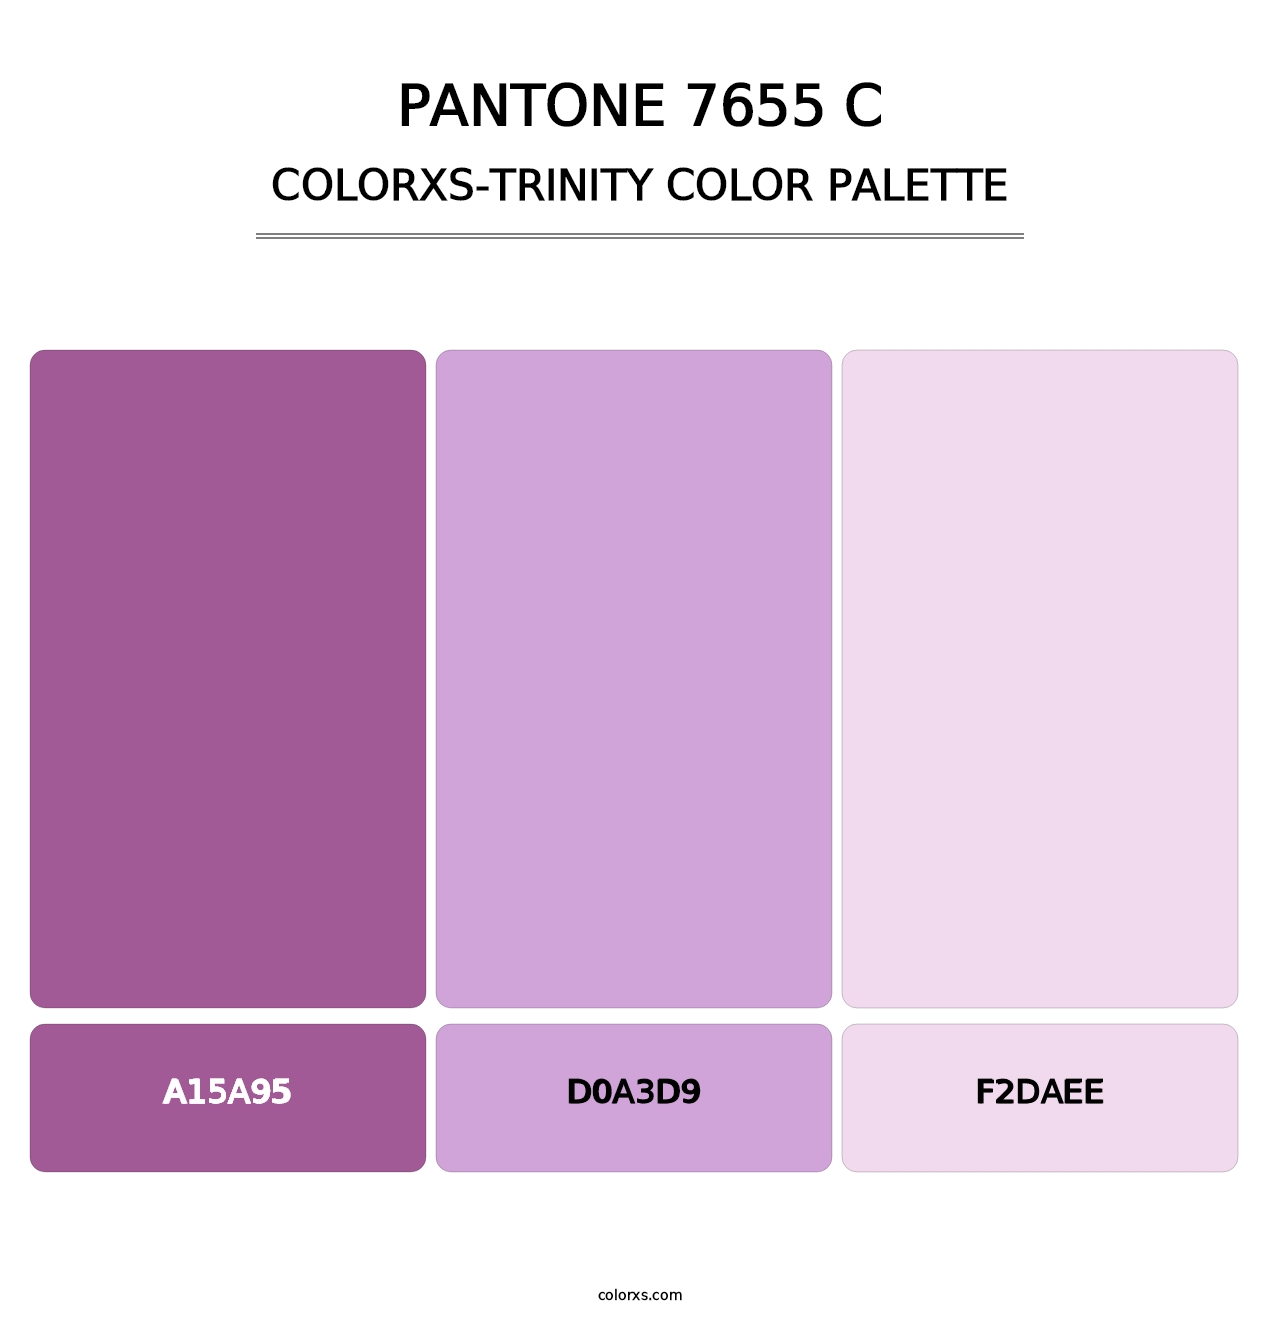 PANTONE 7655 C - Colorxs Trinity Palette